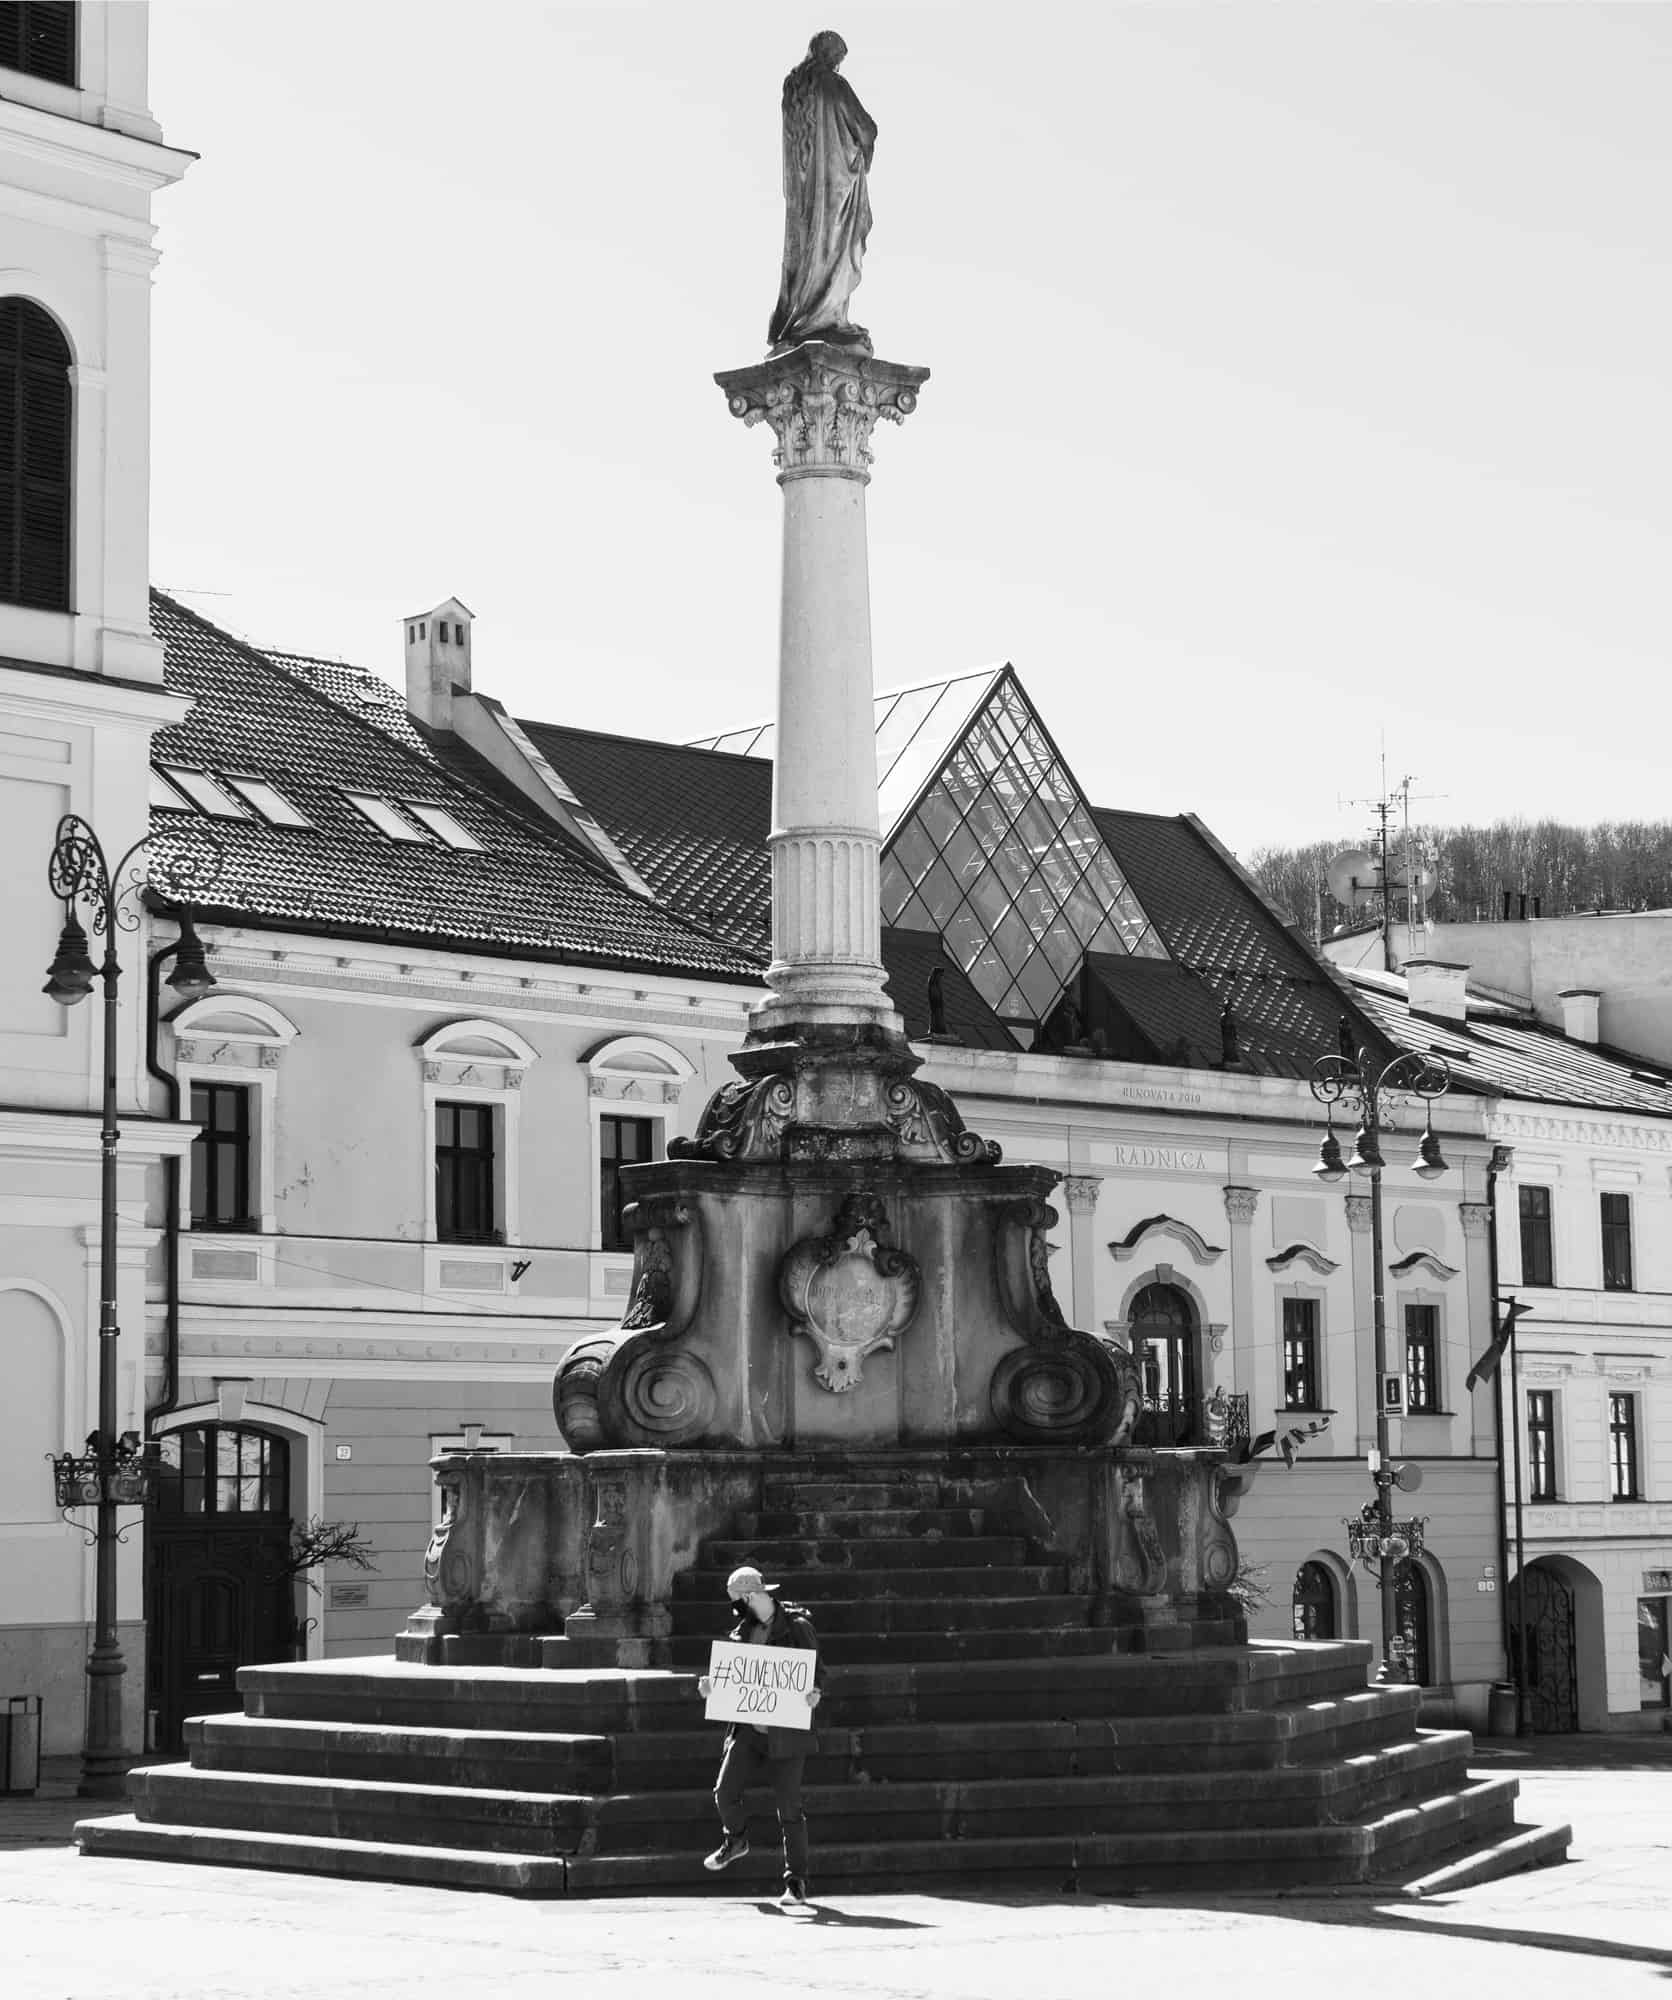 Matúš Astrab, Banská Bystrica